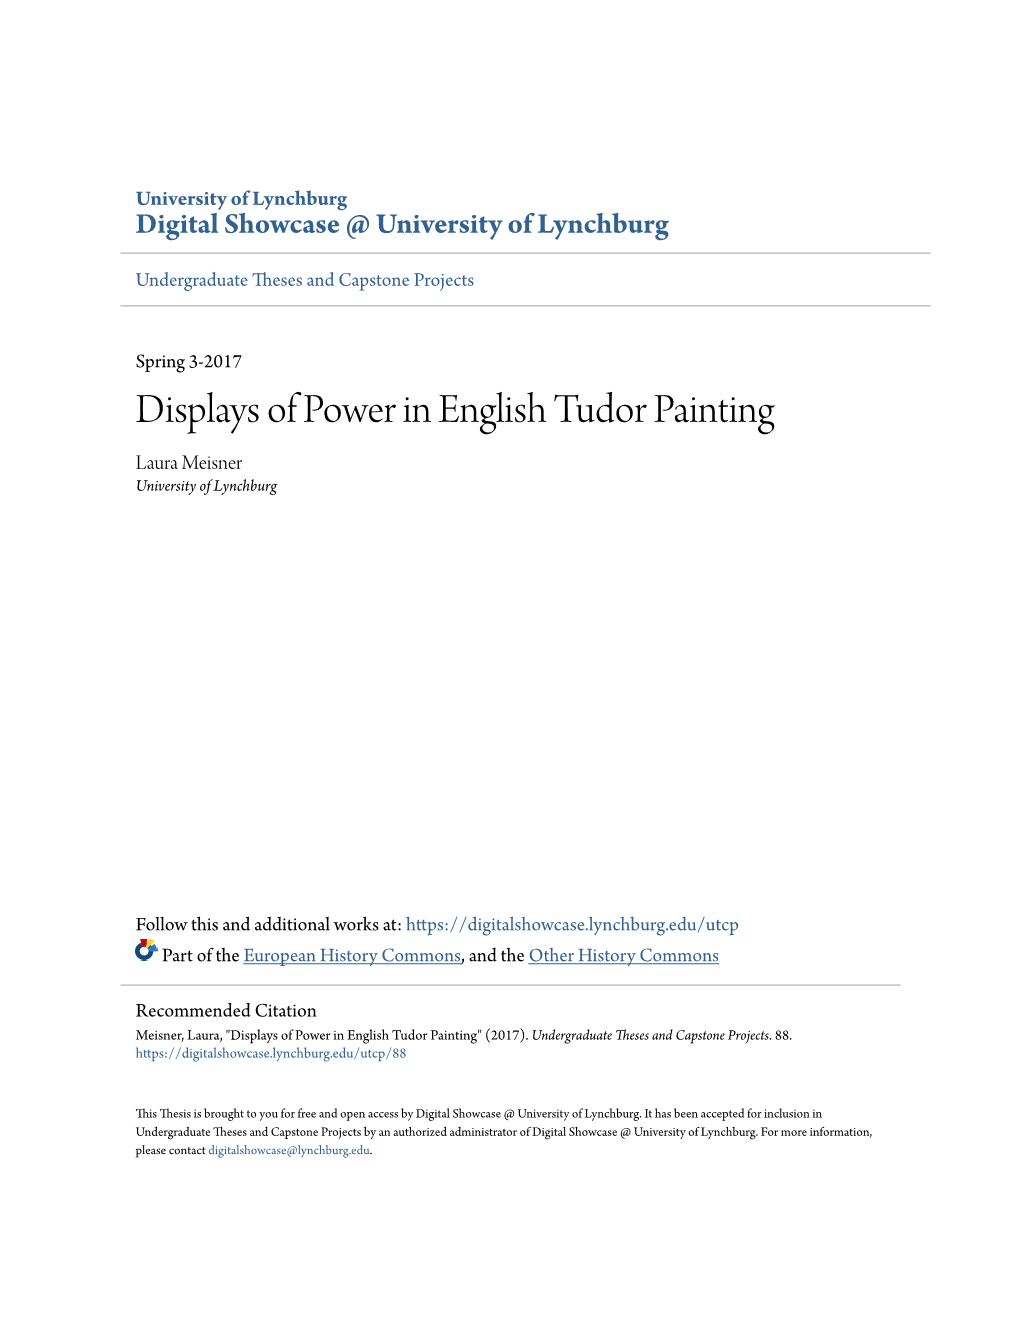 Displays of Power in English Tudor Painting Laura Meisner University of Lynchburg